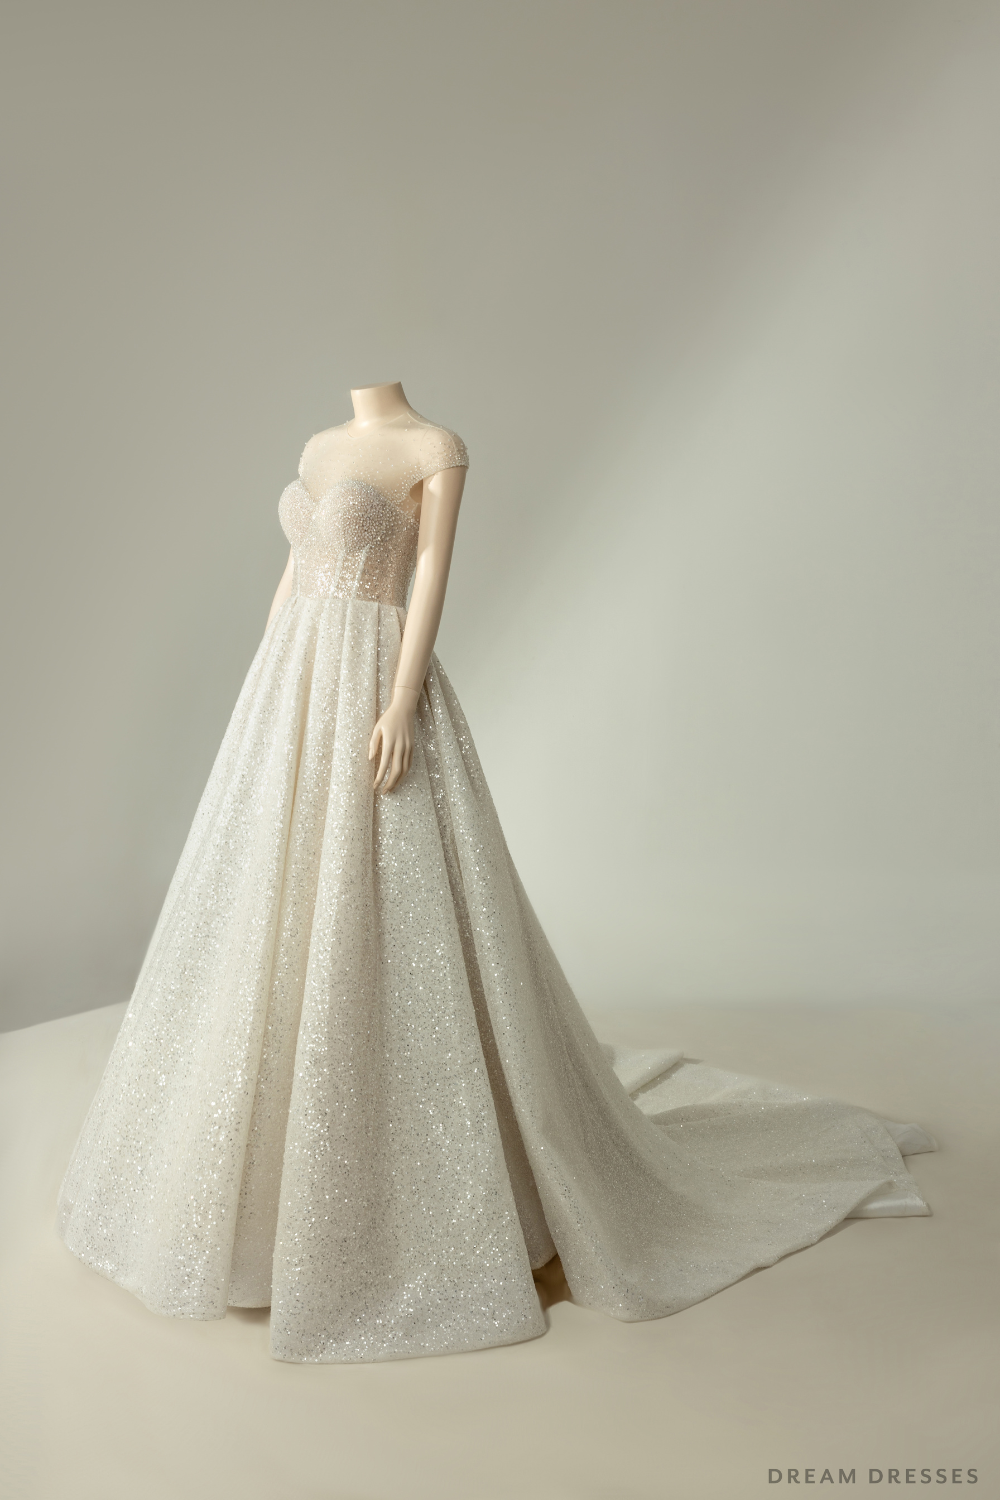 Royal Ballgown Wedding Dress with Crystal Embellishments (#CERIDWEN)